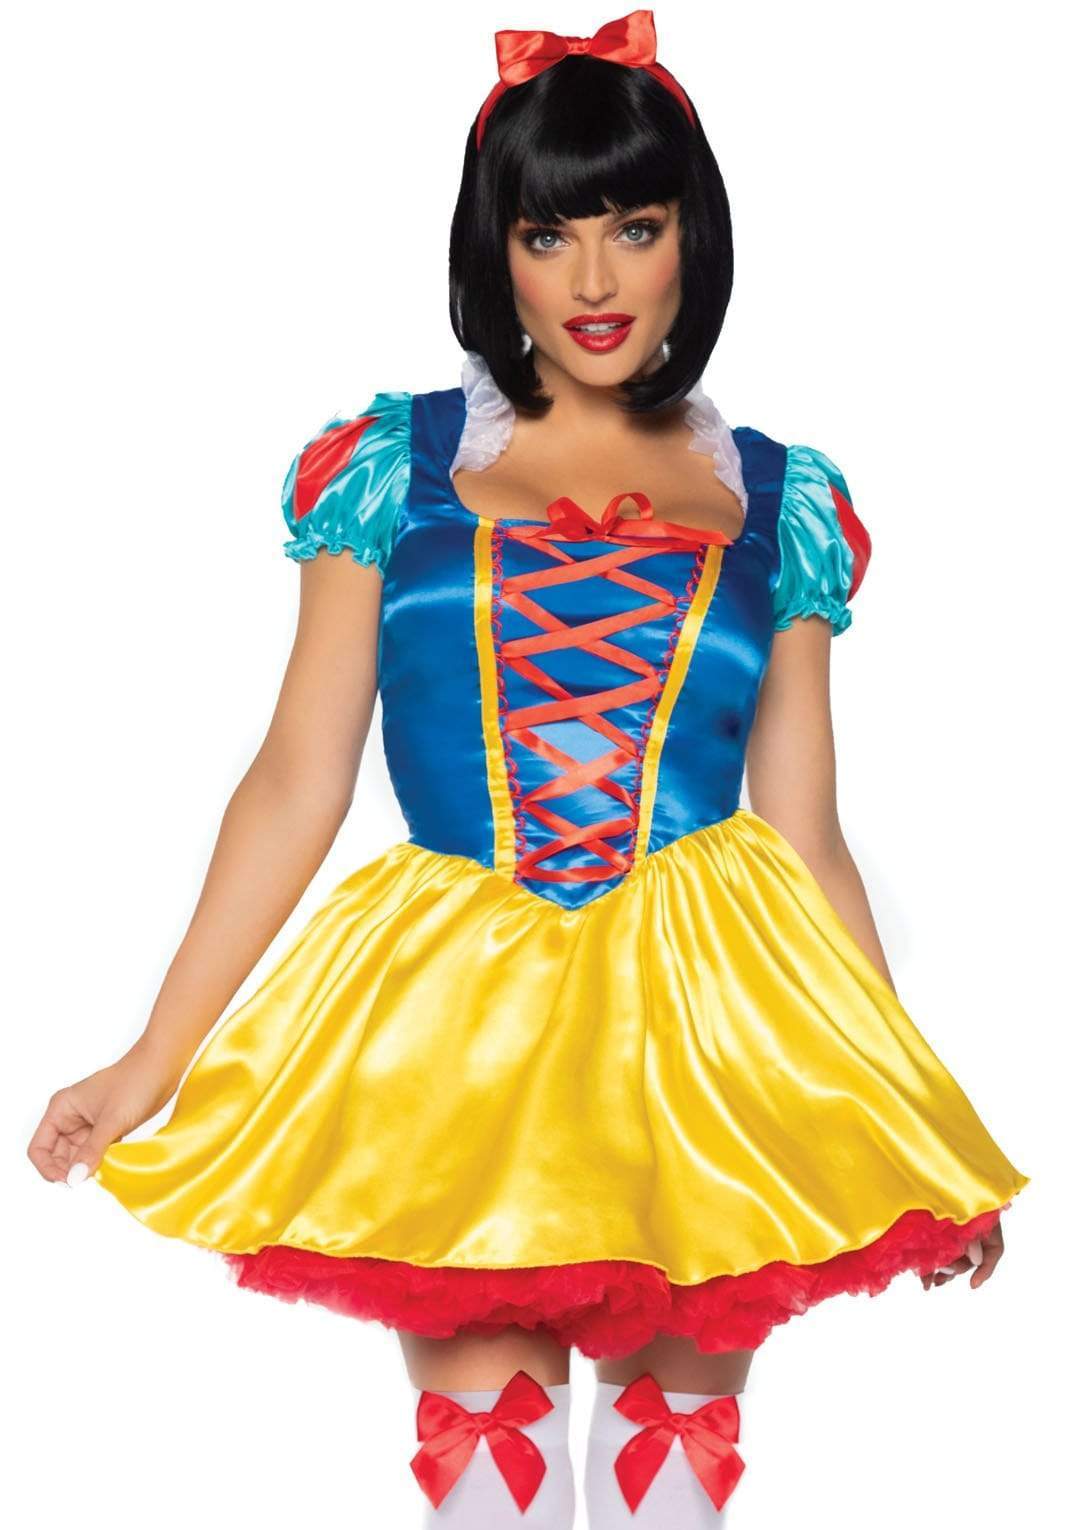 Snow White Costume, Women's Fairytale Costume